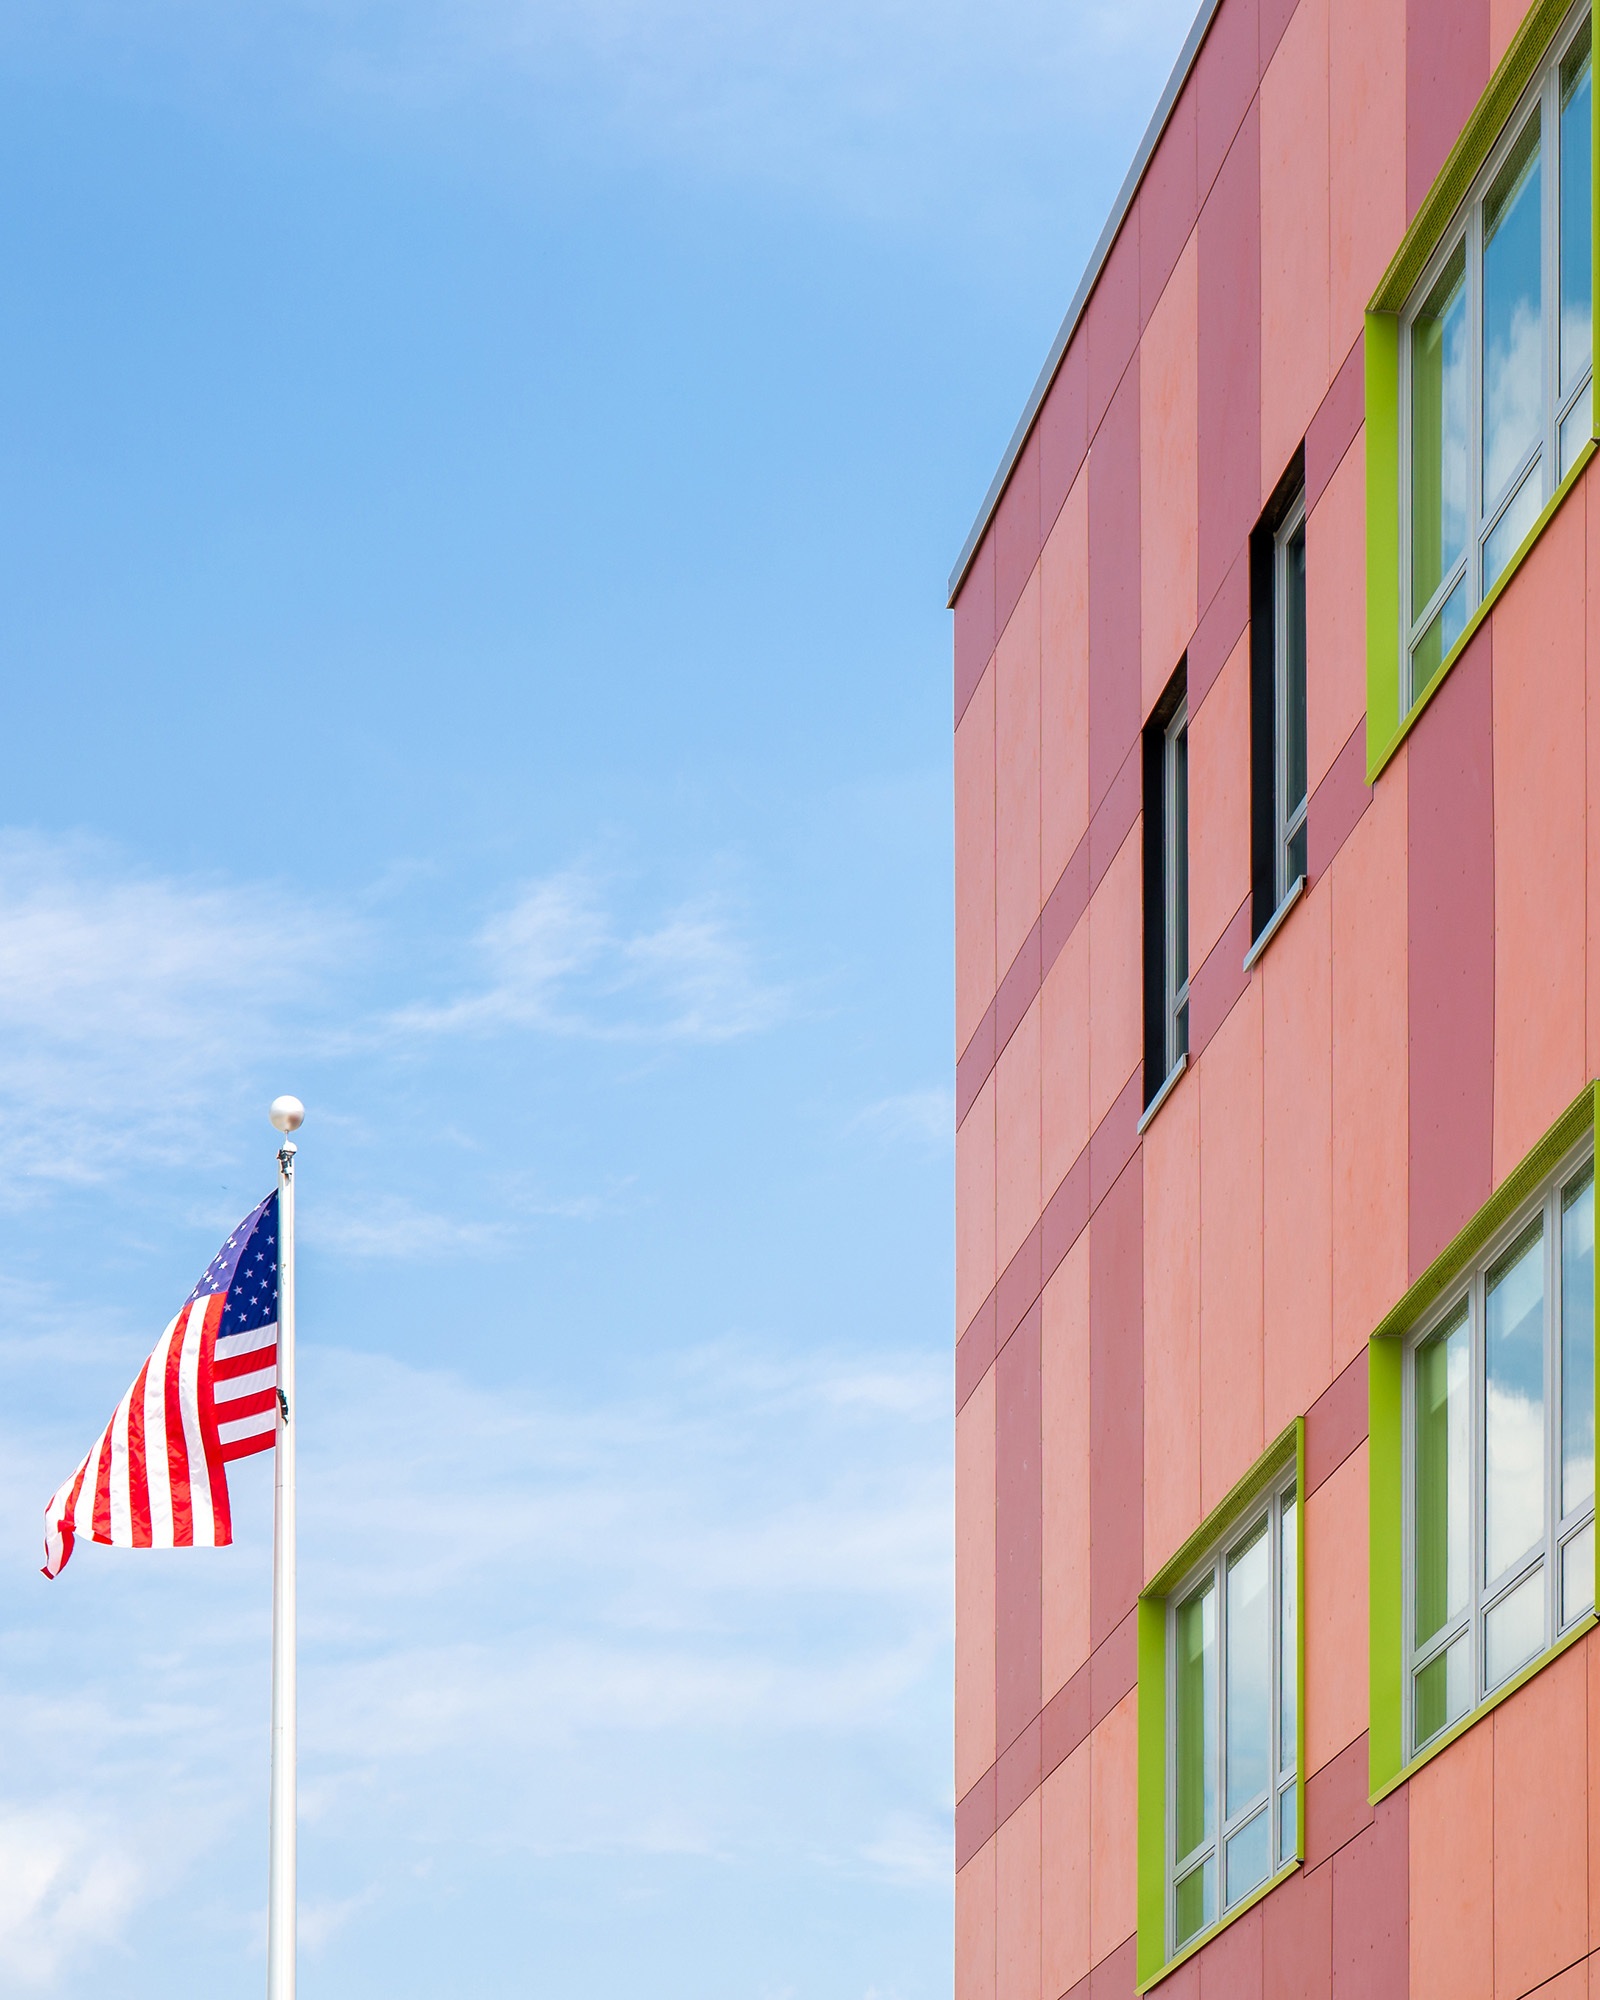 PS 256Q façade panels and American flag